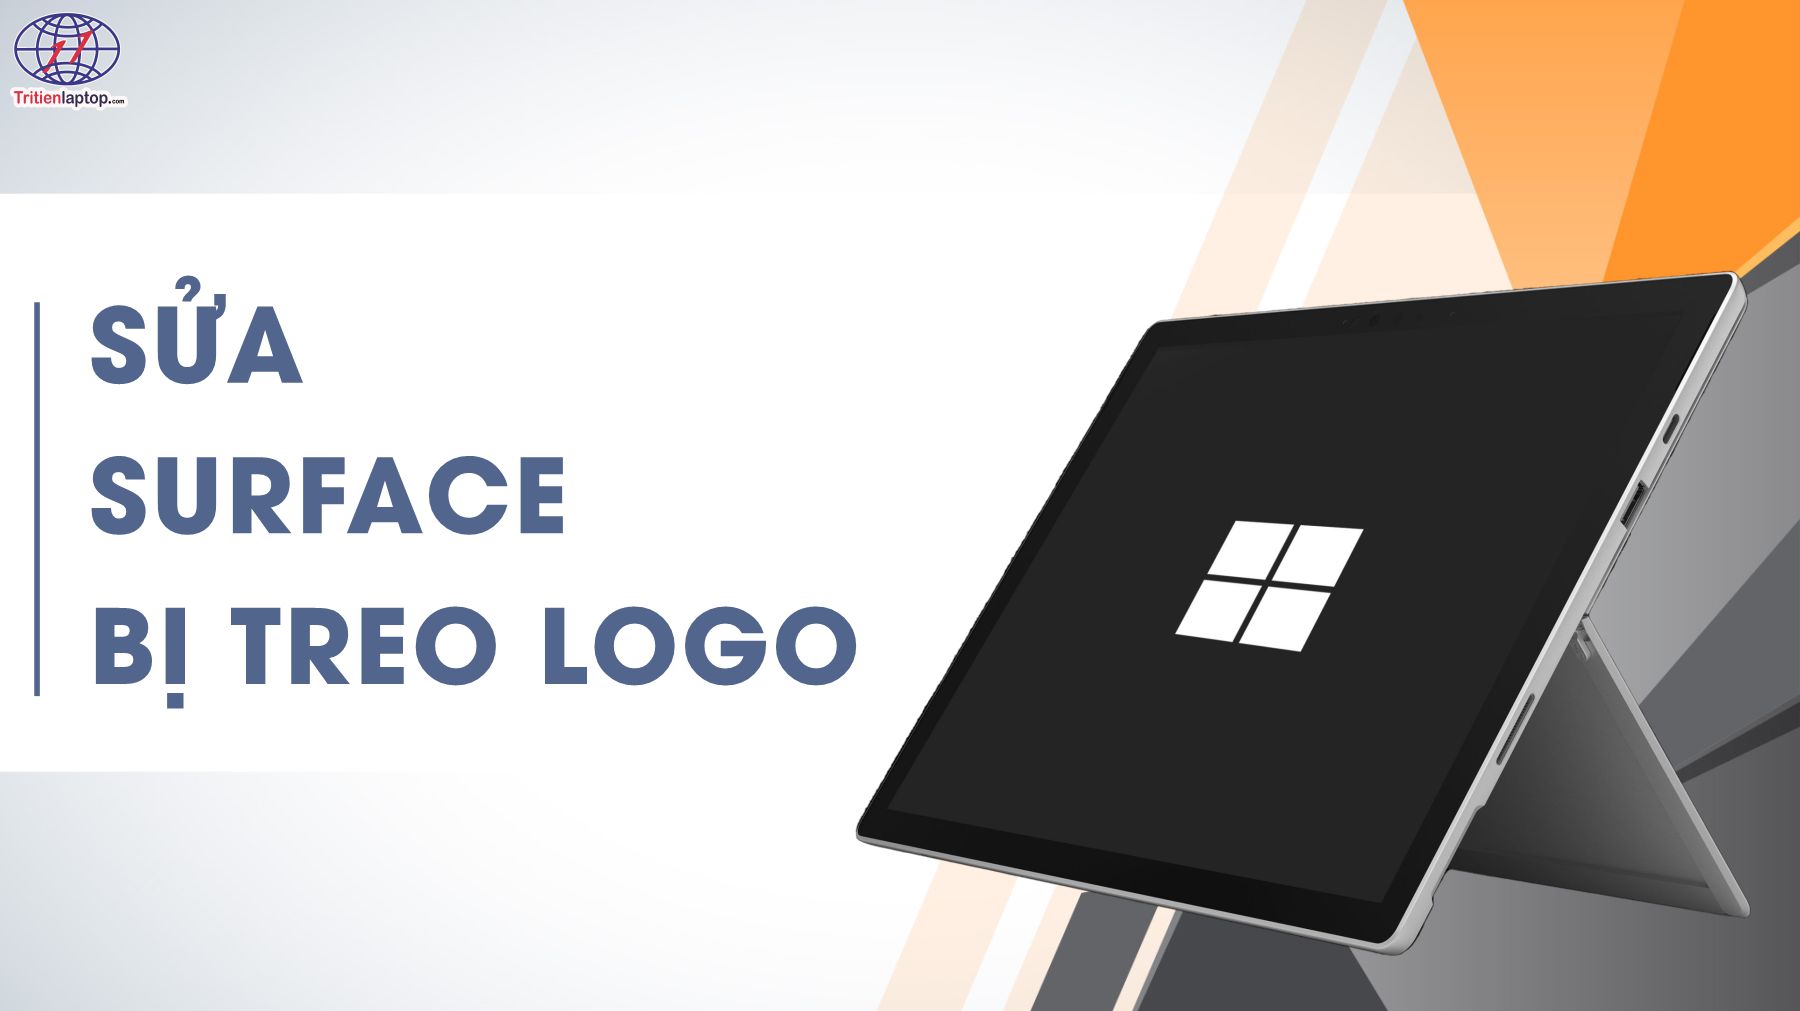 Sửa Surface bị treo Logo